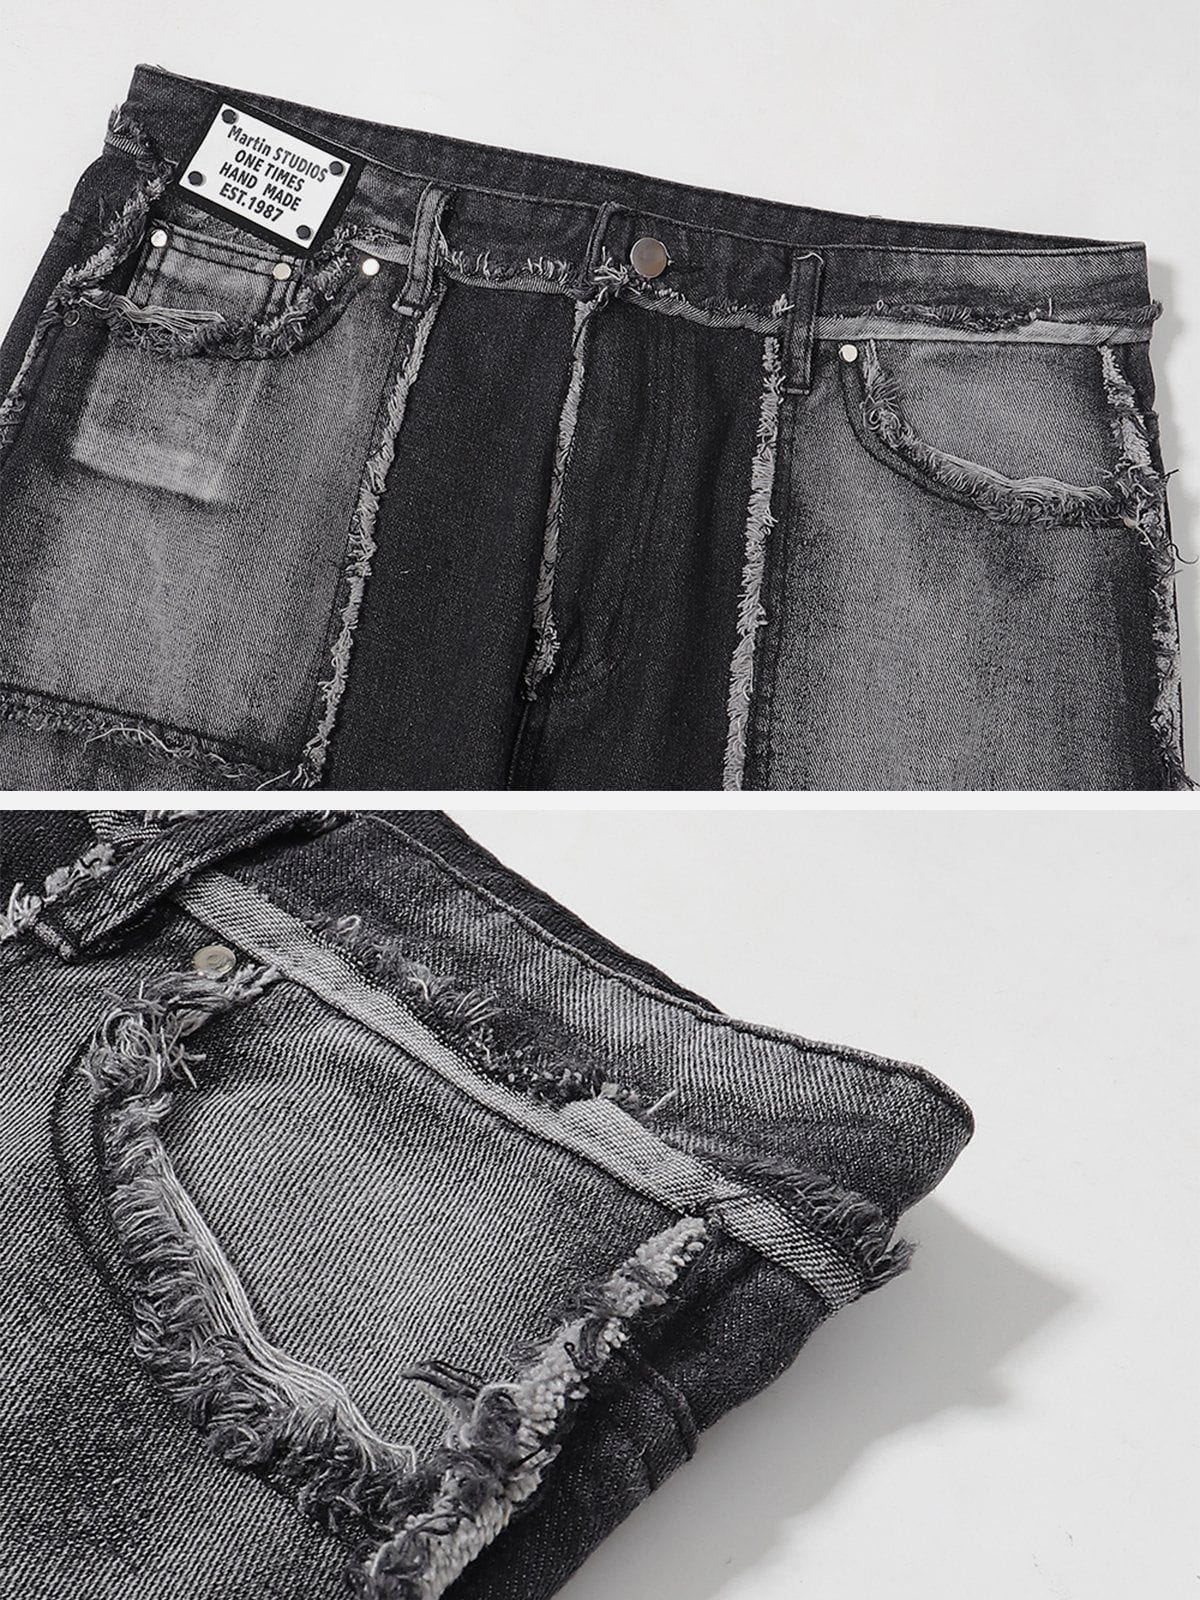 Majesda® - Vintage Gradient Burlap Jeans outfit ideas streetwear fashion